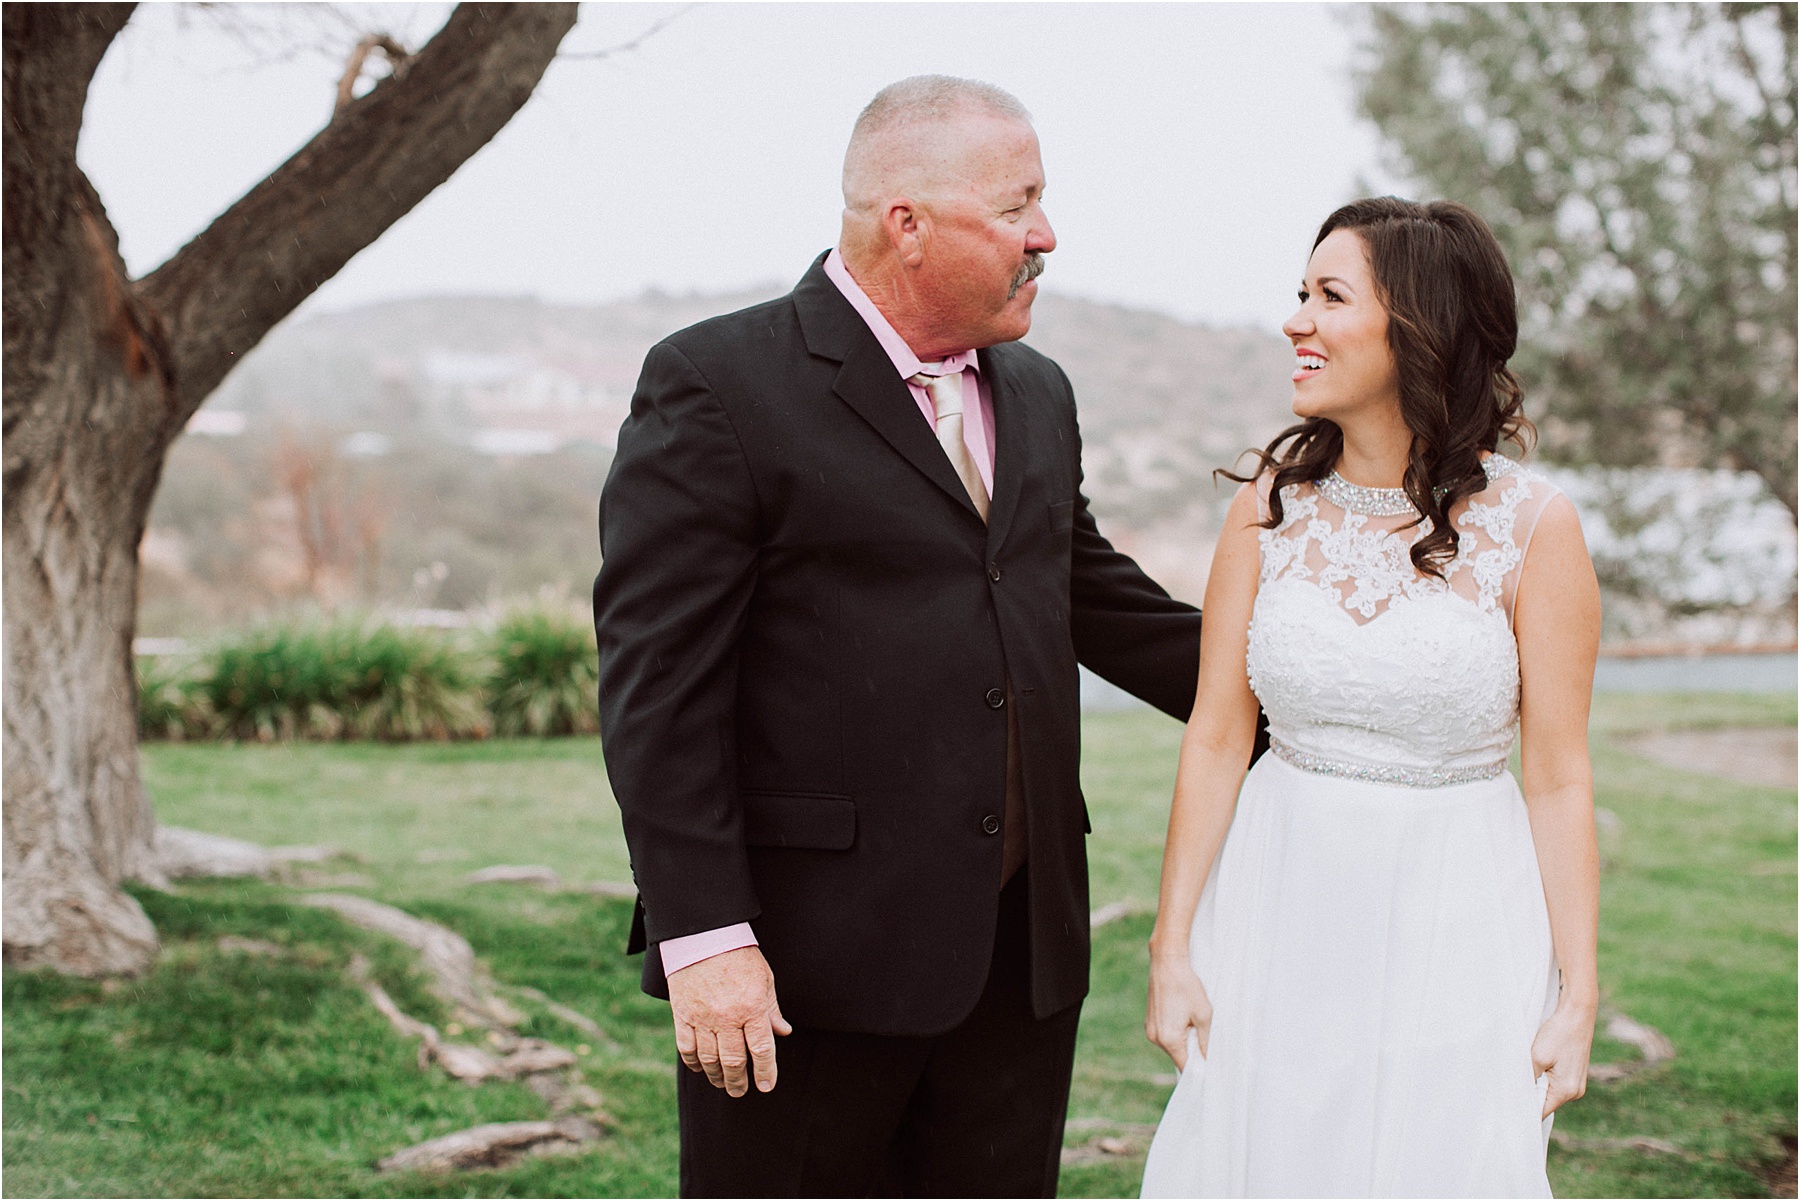 Santa Clarita Intimate Wedding & Elopement Photography - first look with bride's dad